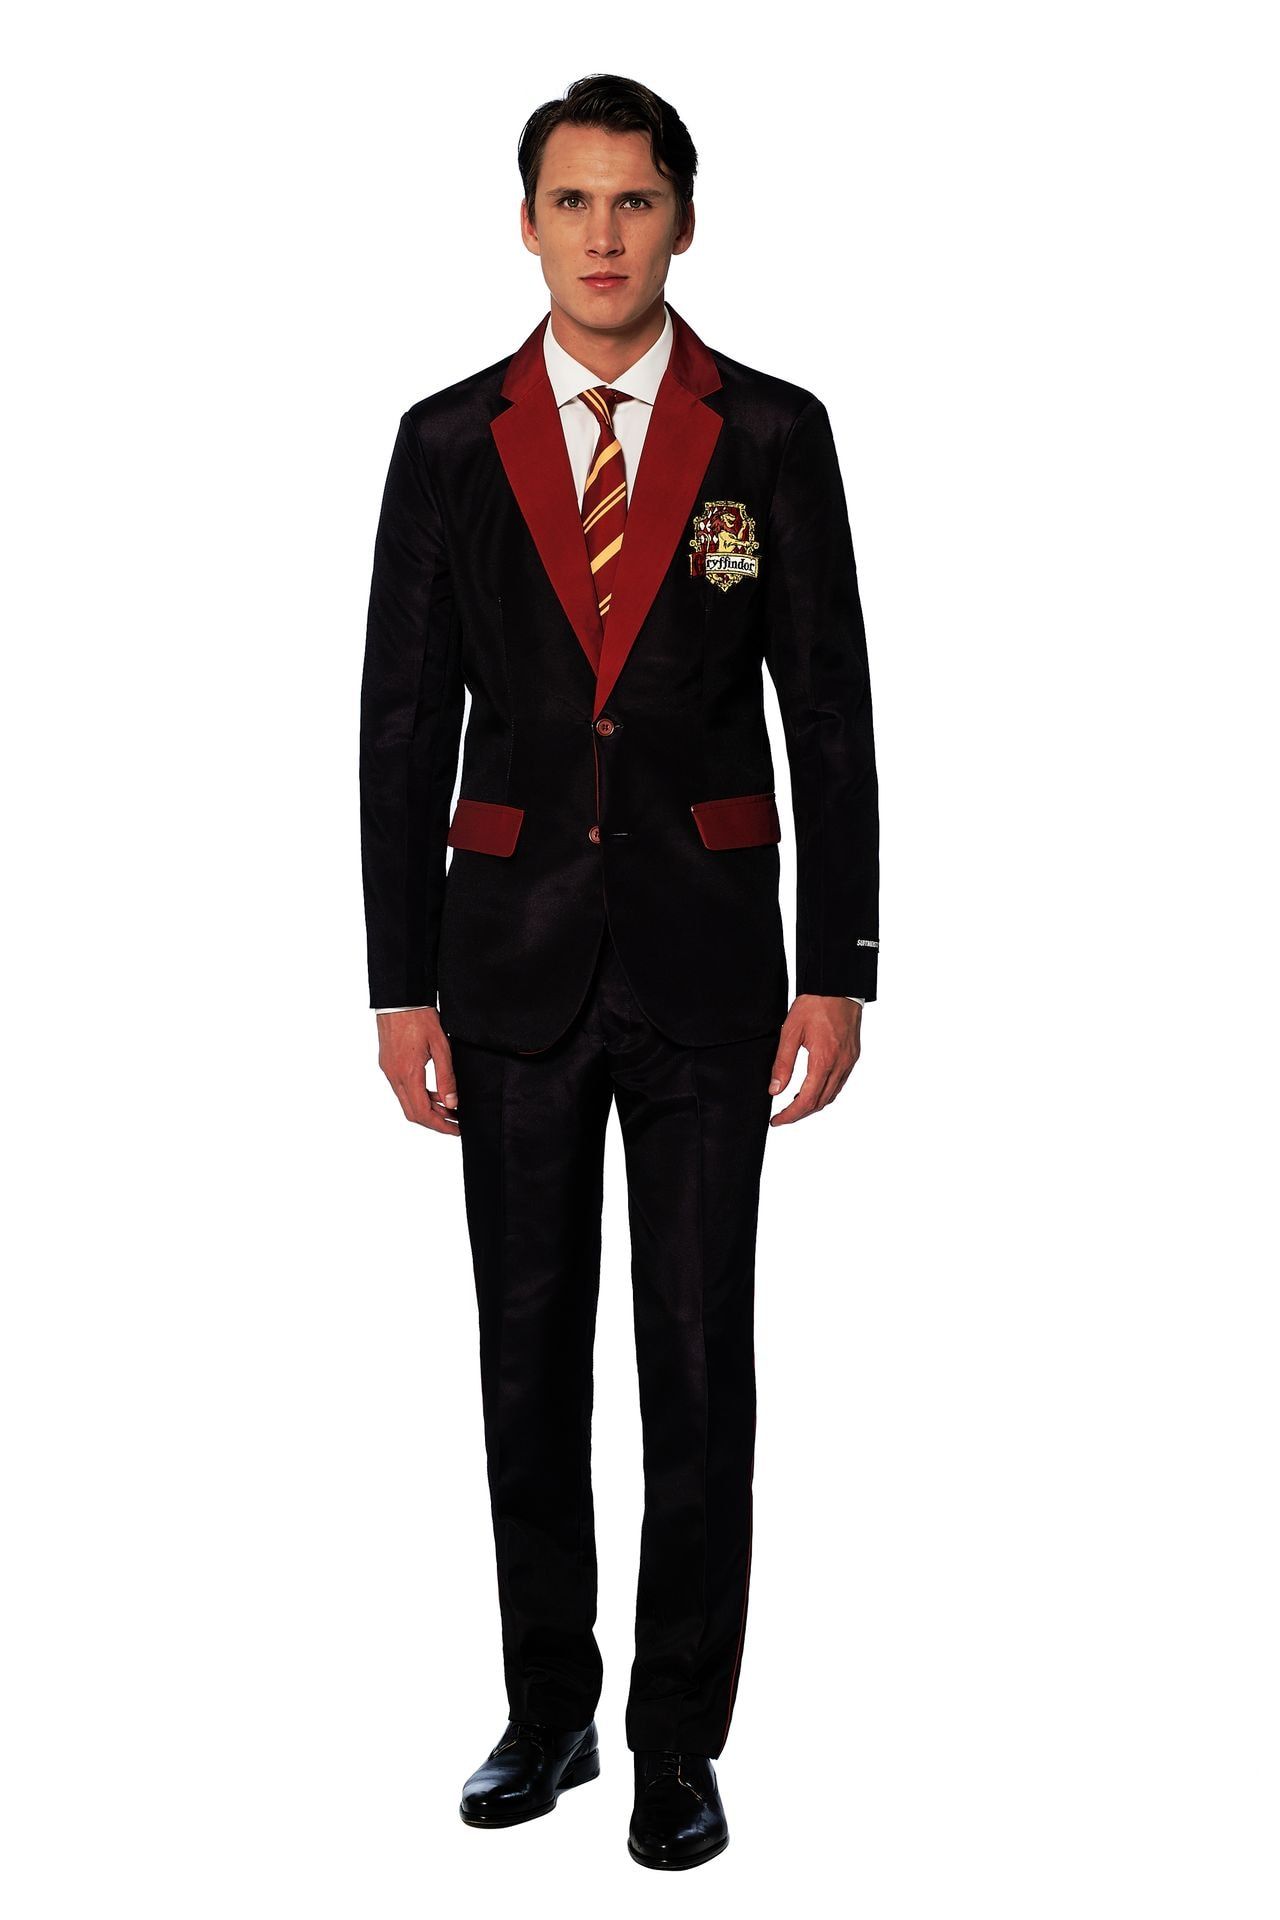 Griffioendor Harry Potter Suitmeister kostuum